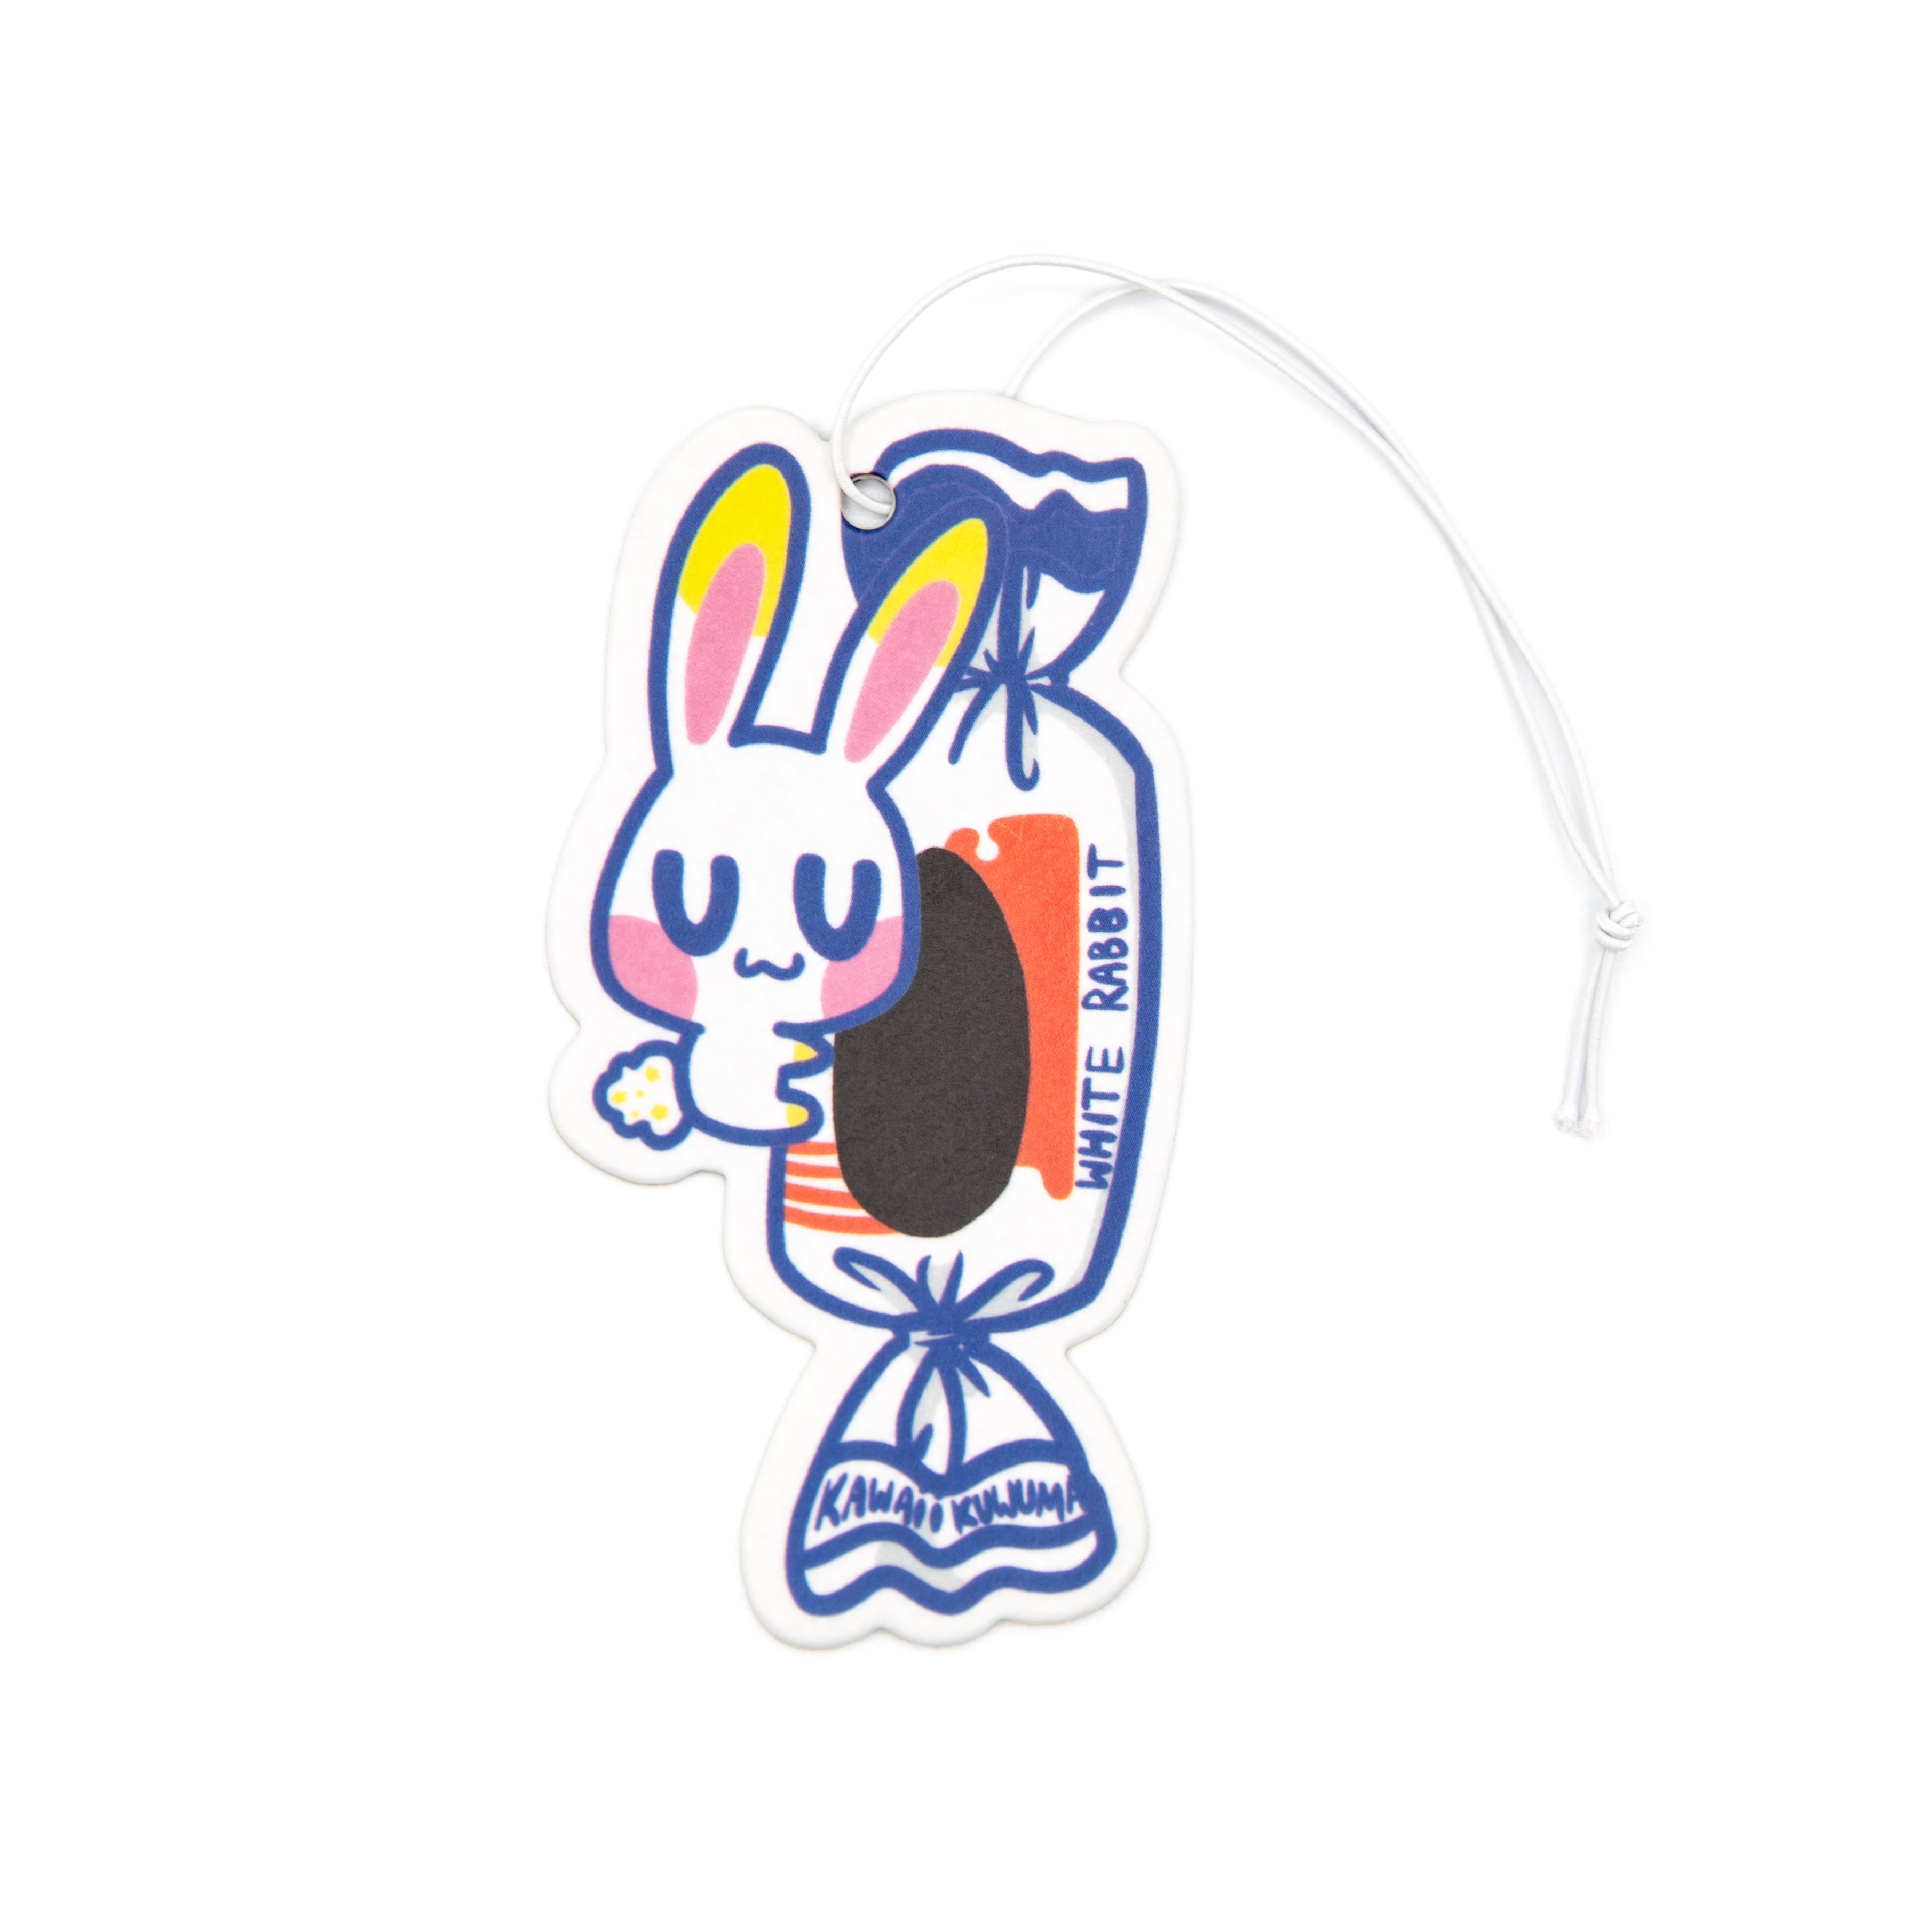 White Rabbit Air Freshener